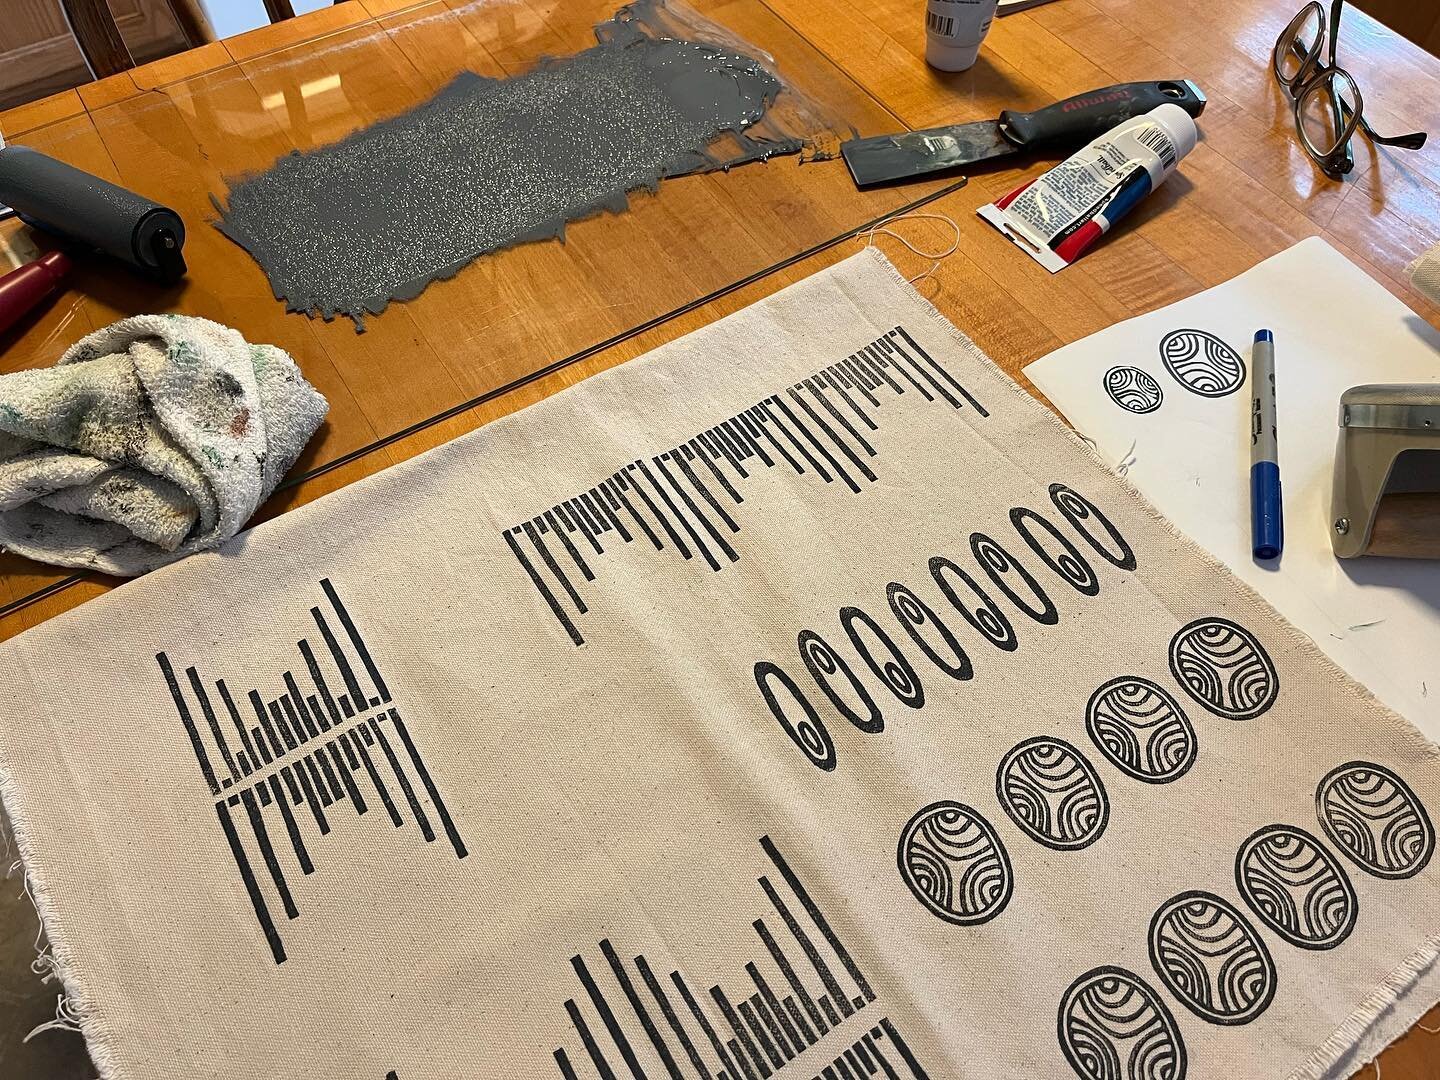 Test printing new ideas&hellip;.more to come!
#fabricprinting #linoprint #mainemade #slowfashion #handmade